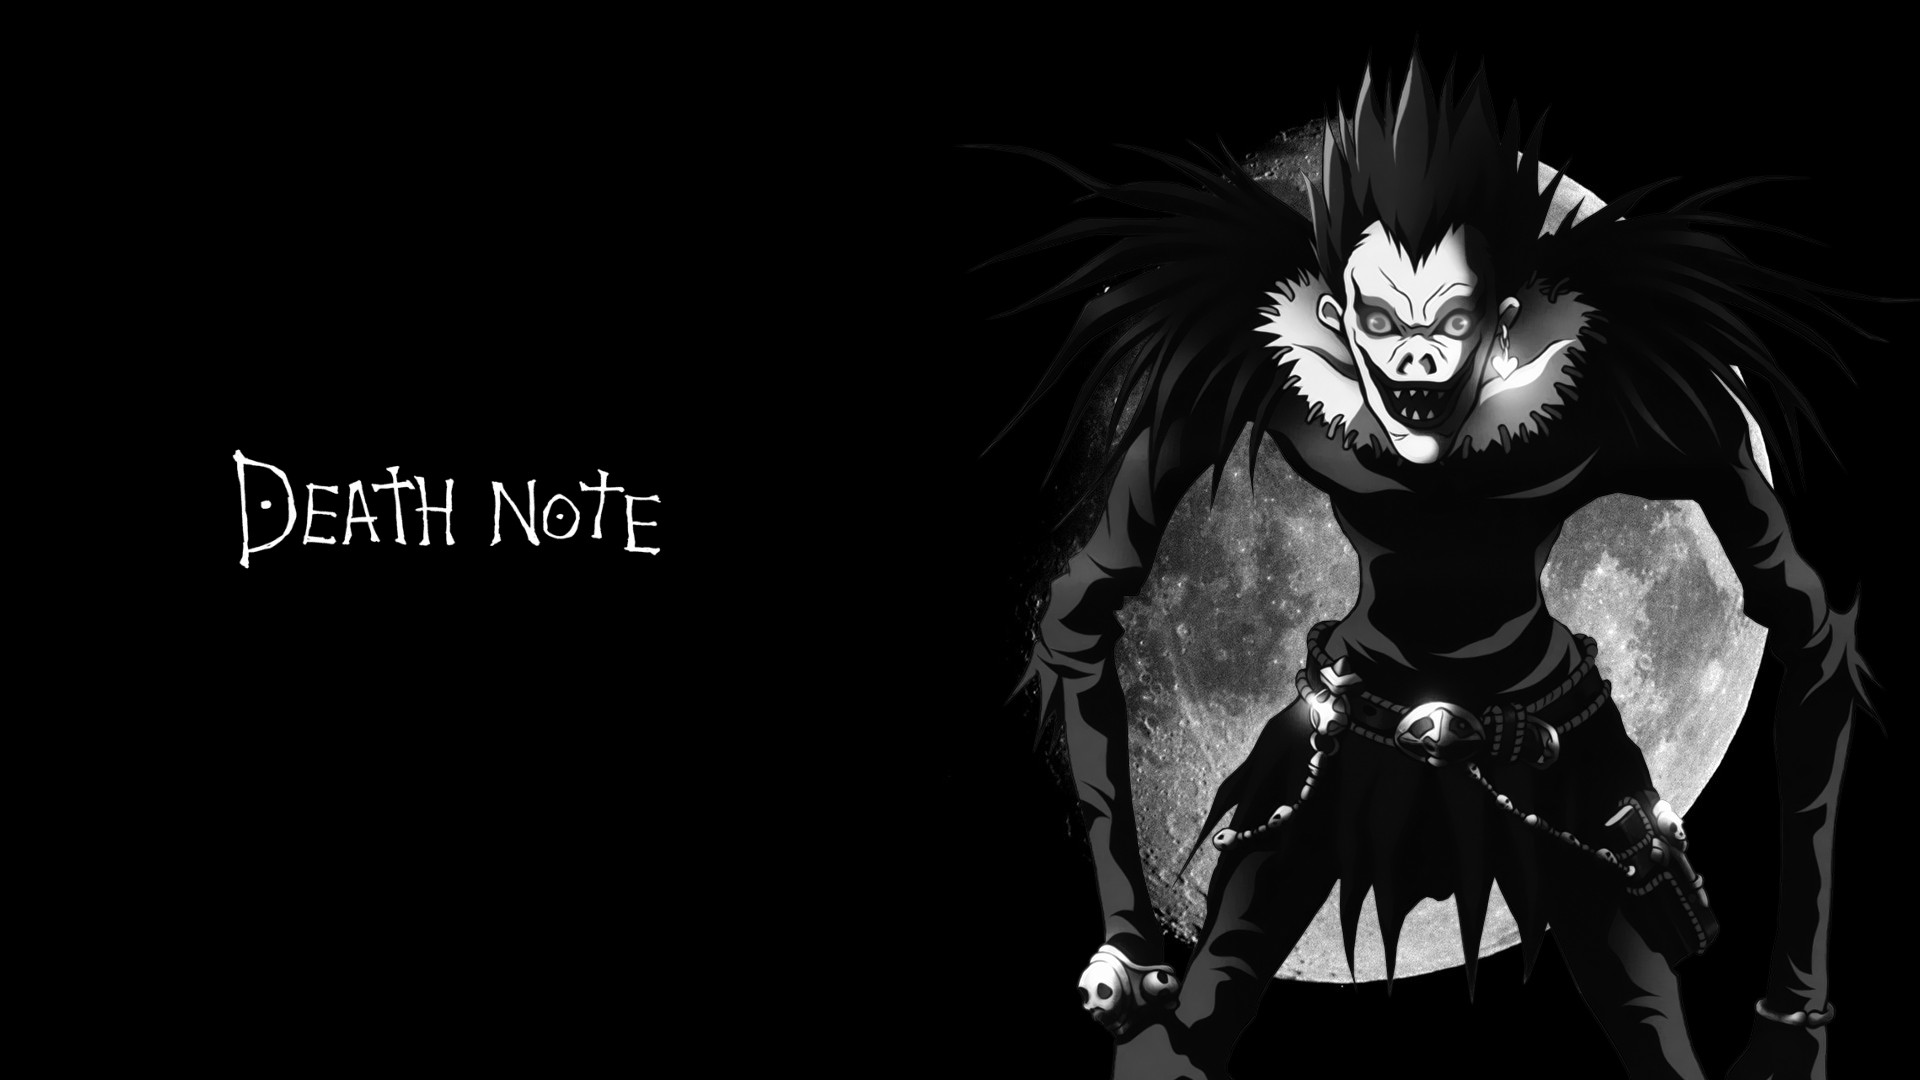 Death Note Ryuk Wallpaper Images : Anime Wallpaper - Kokean.com